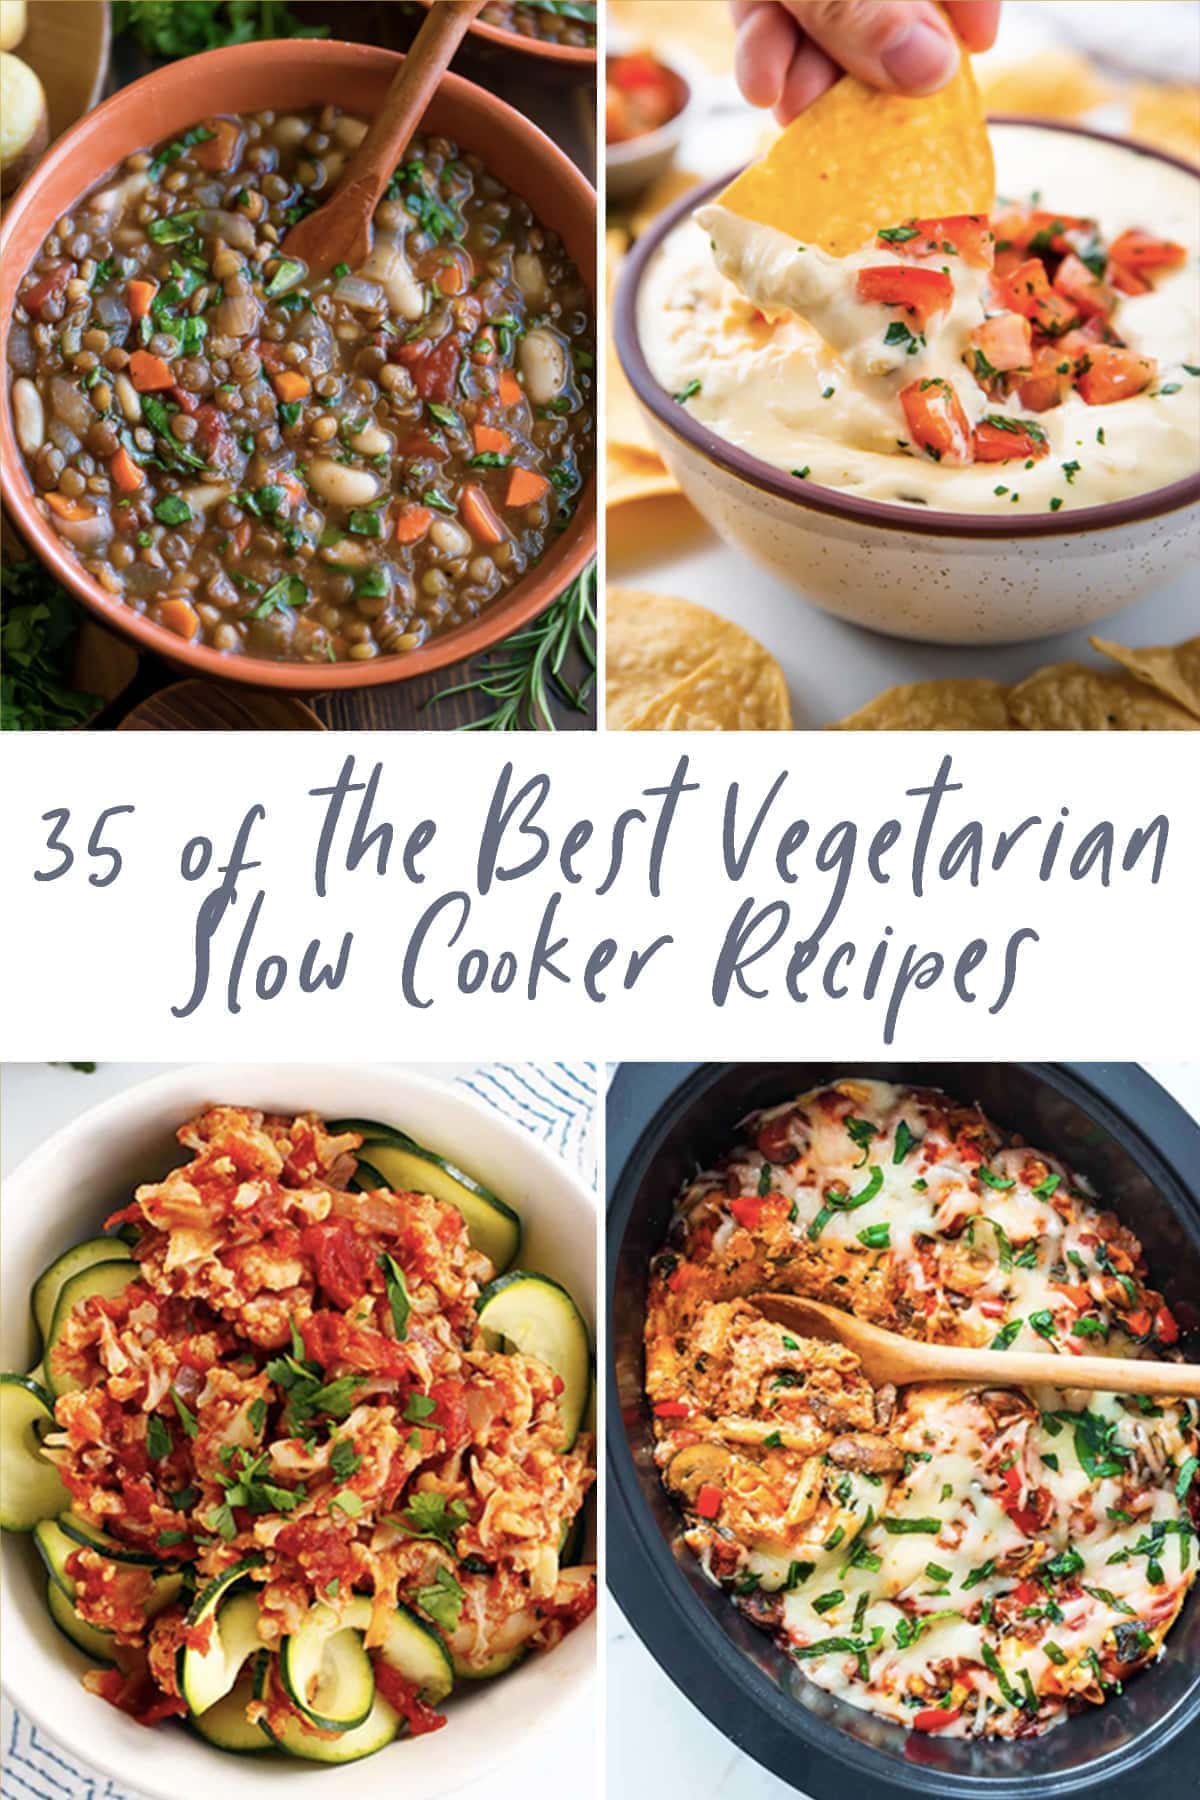 36 Vegetarian slow cooker recipes